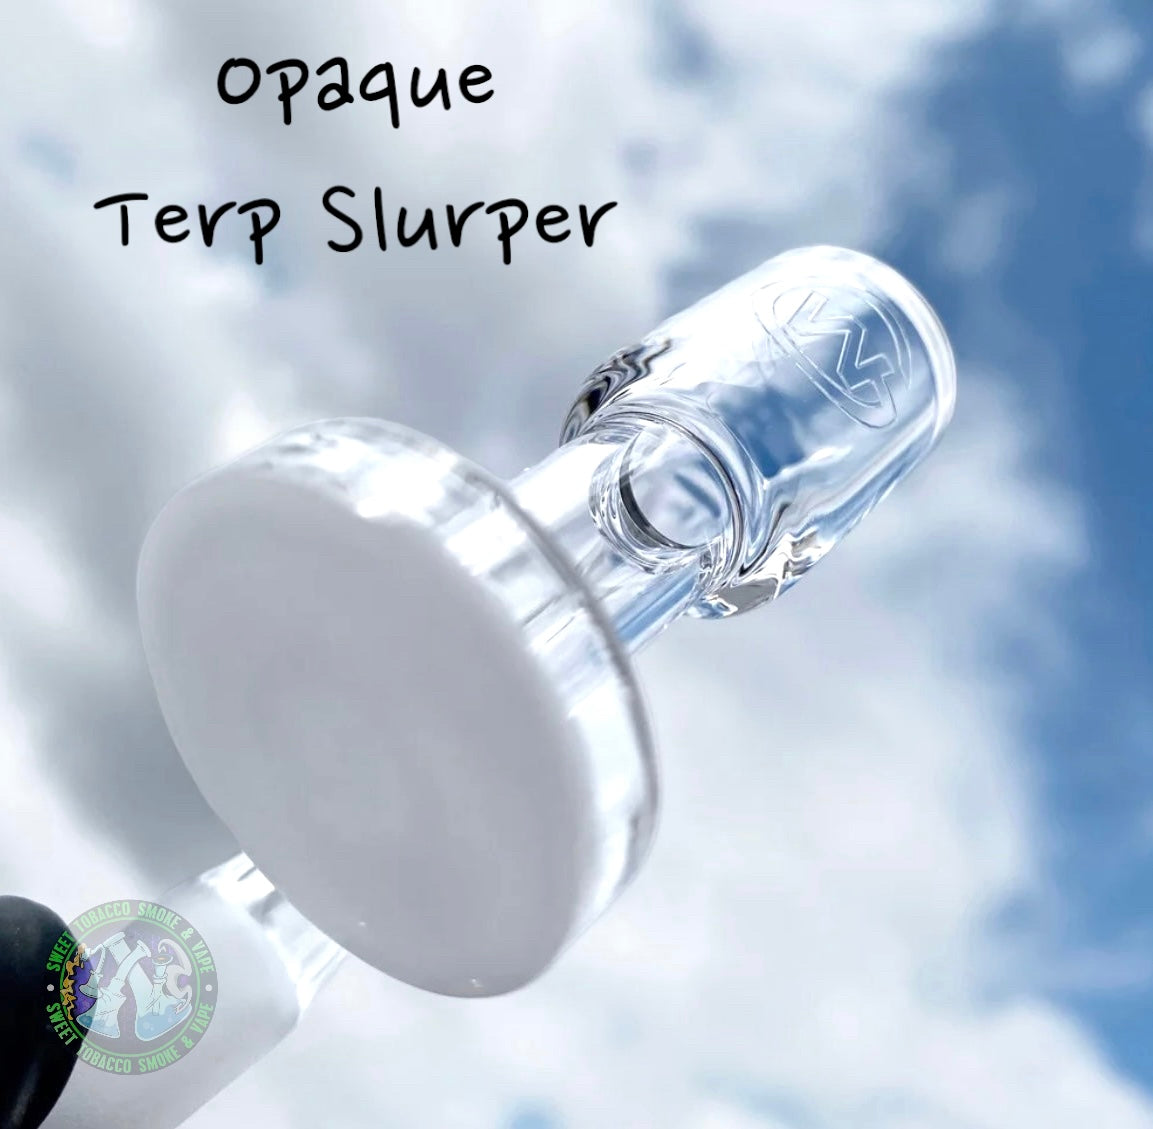 GeeWest - Terp Slurper (Opaque)